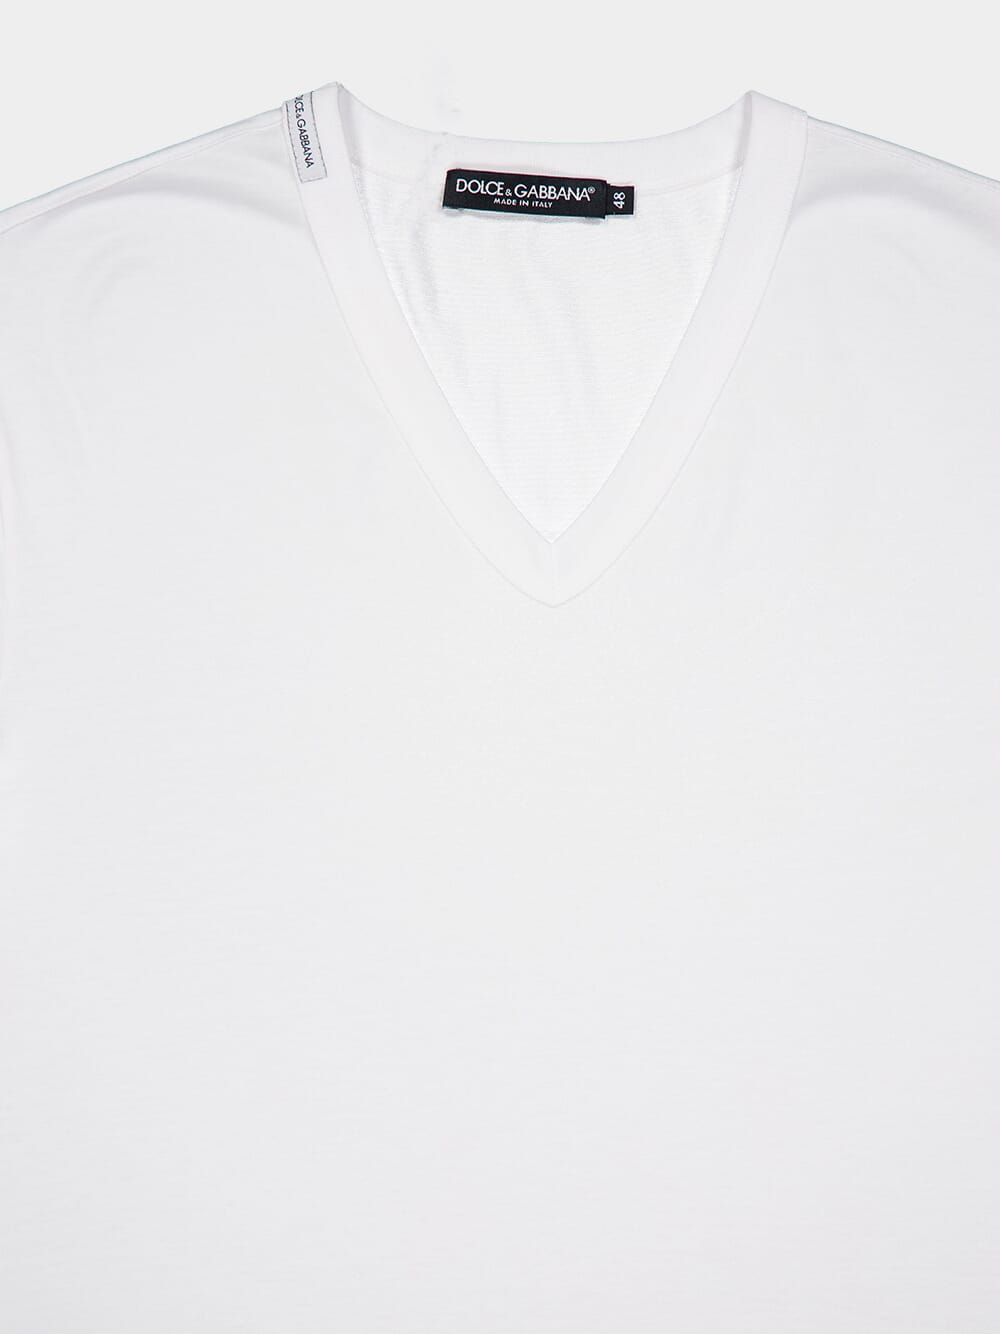 Dolce & GabbanaWhite V-Neck Cotton T-Shirt at Fashion Clinic